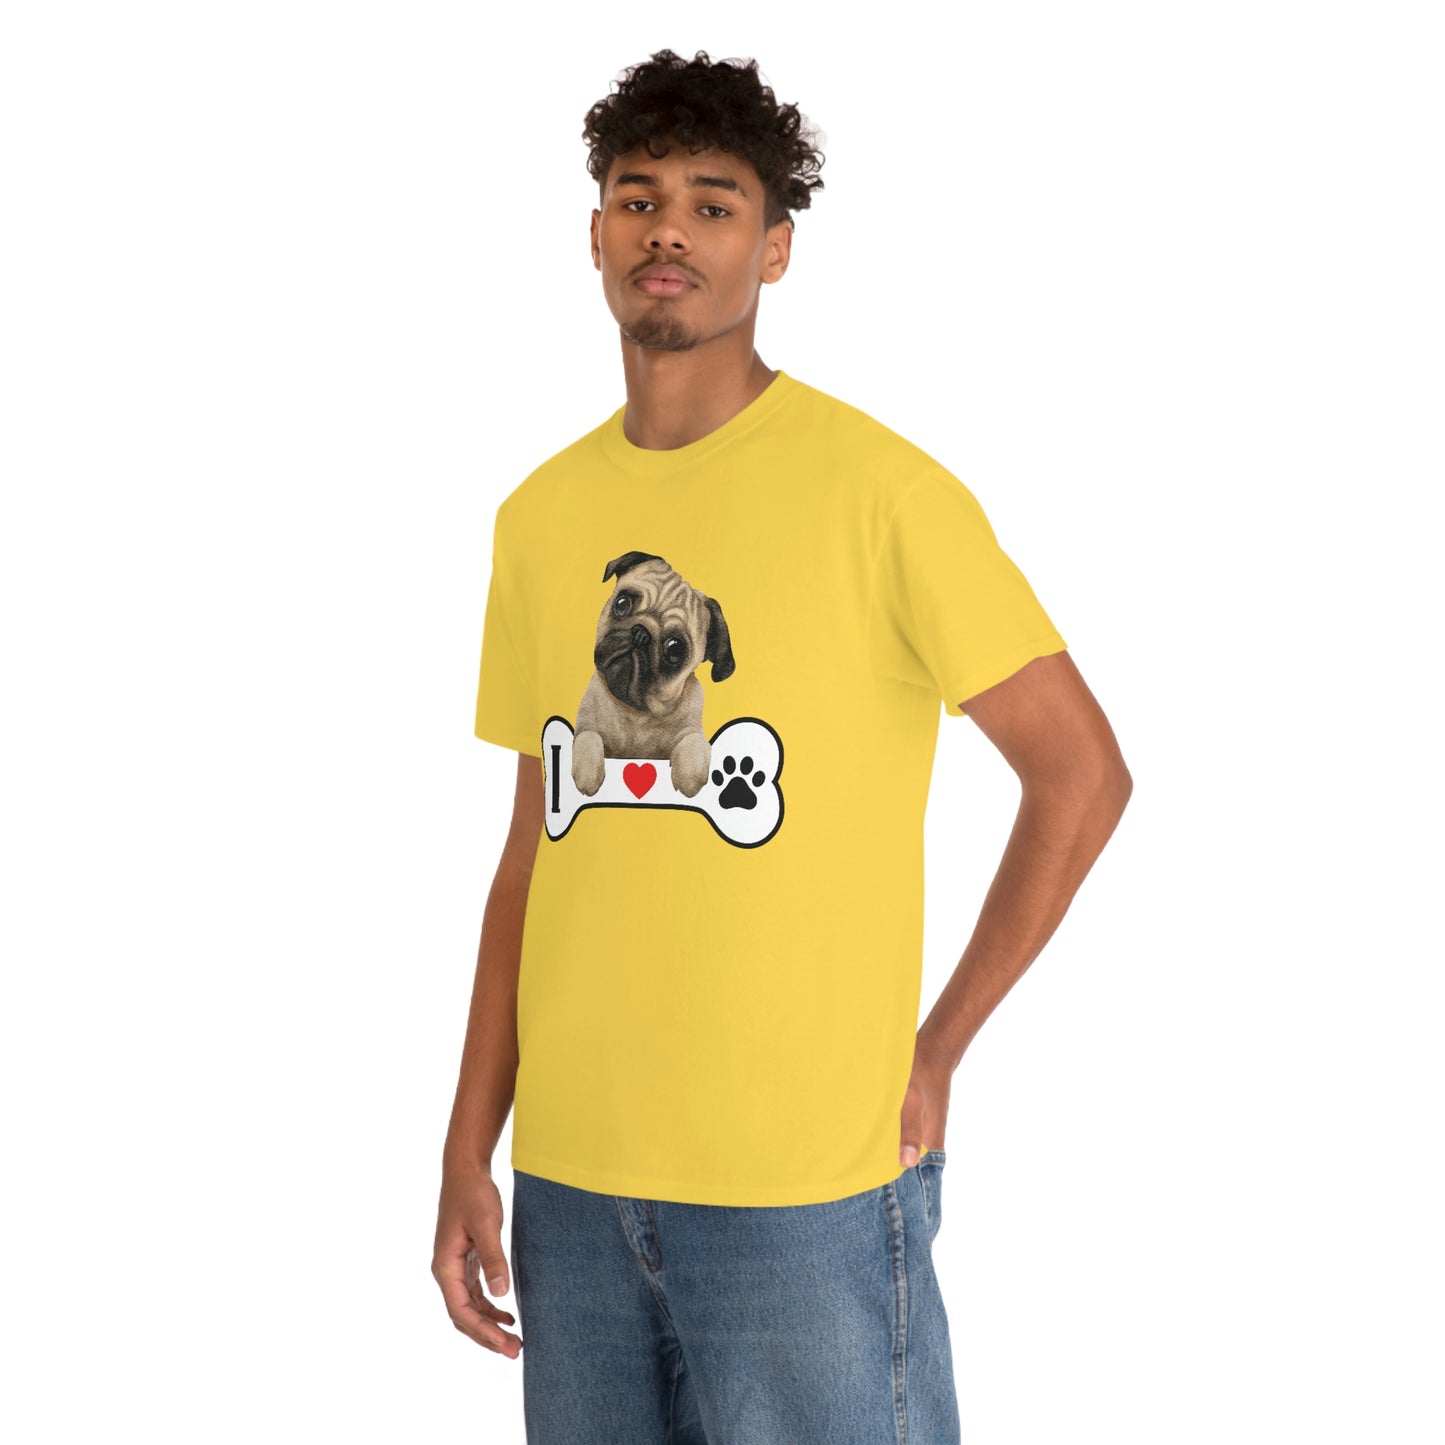 I Love PAW ( Pug puppy)  "Dog Lover" design Graphic tee shirt